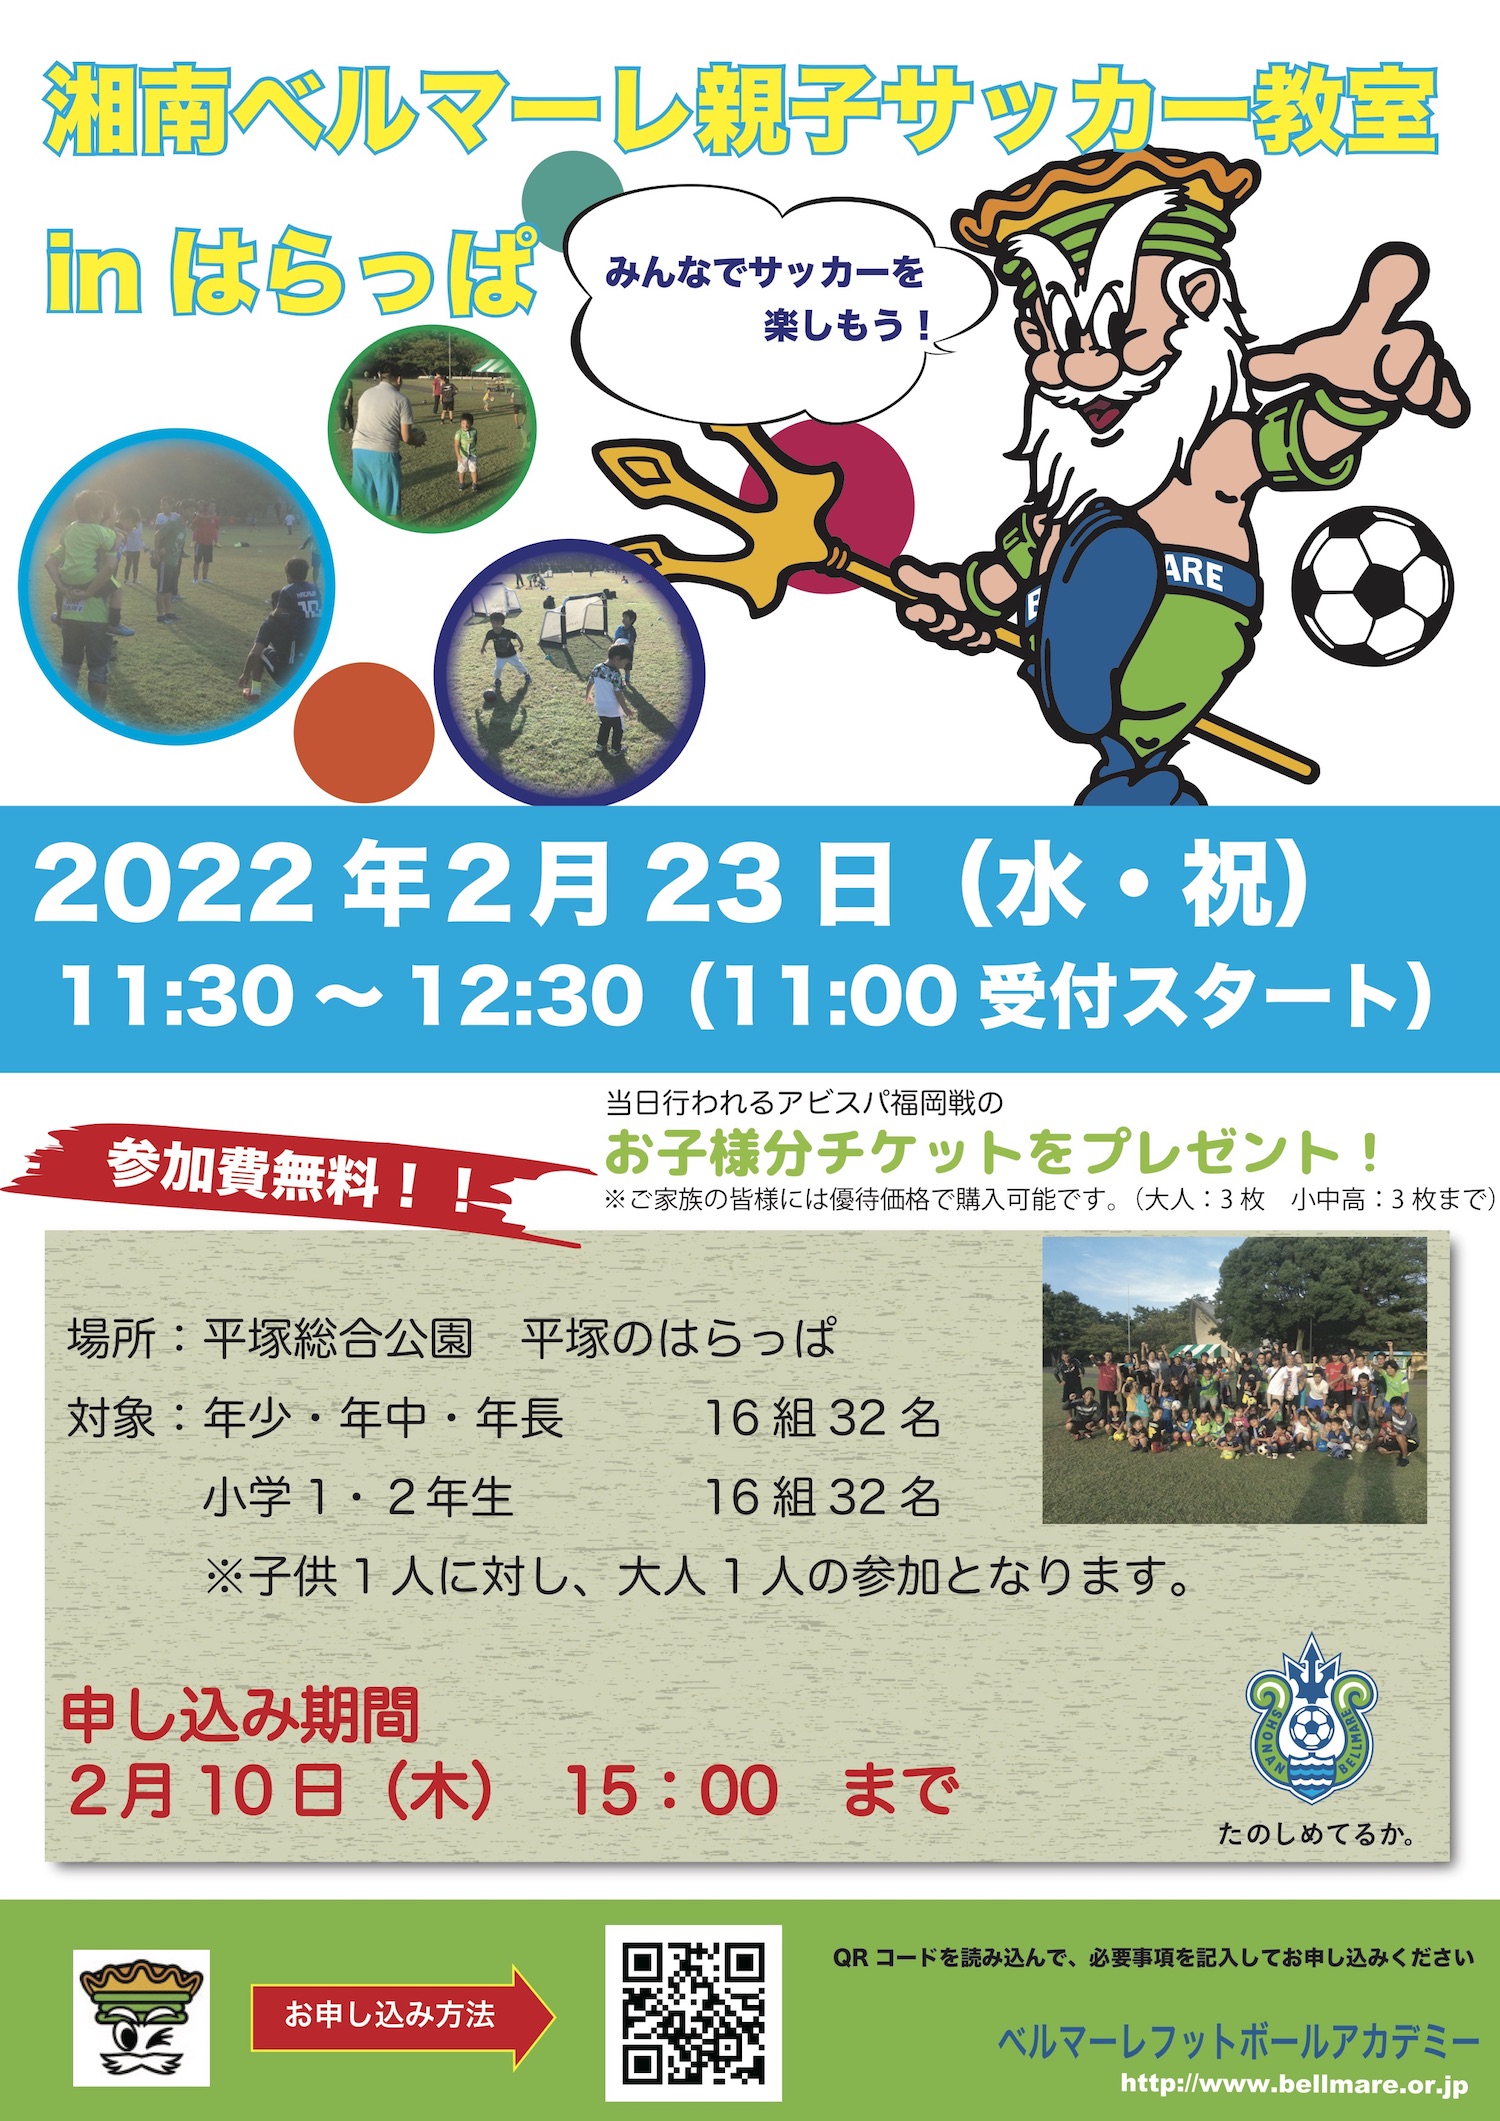 http://www.bellmare.or.jp/soccer/news/photo/fb220203_01_02.jpg